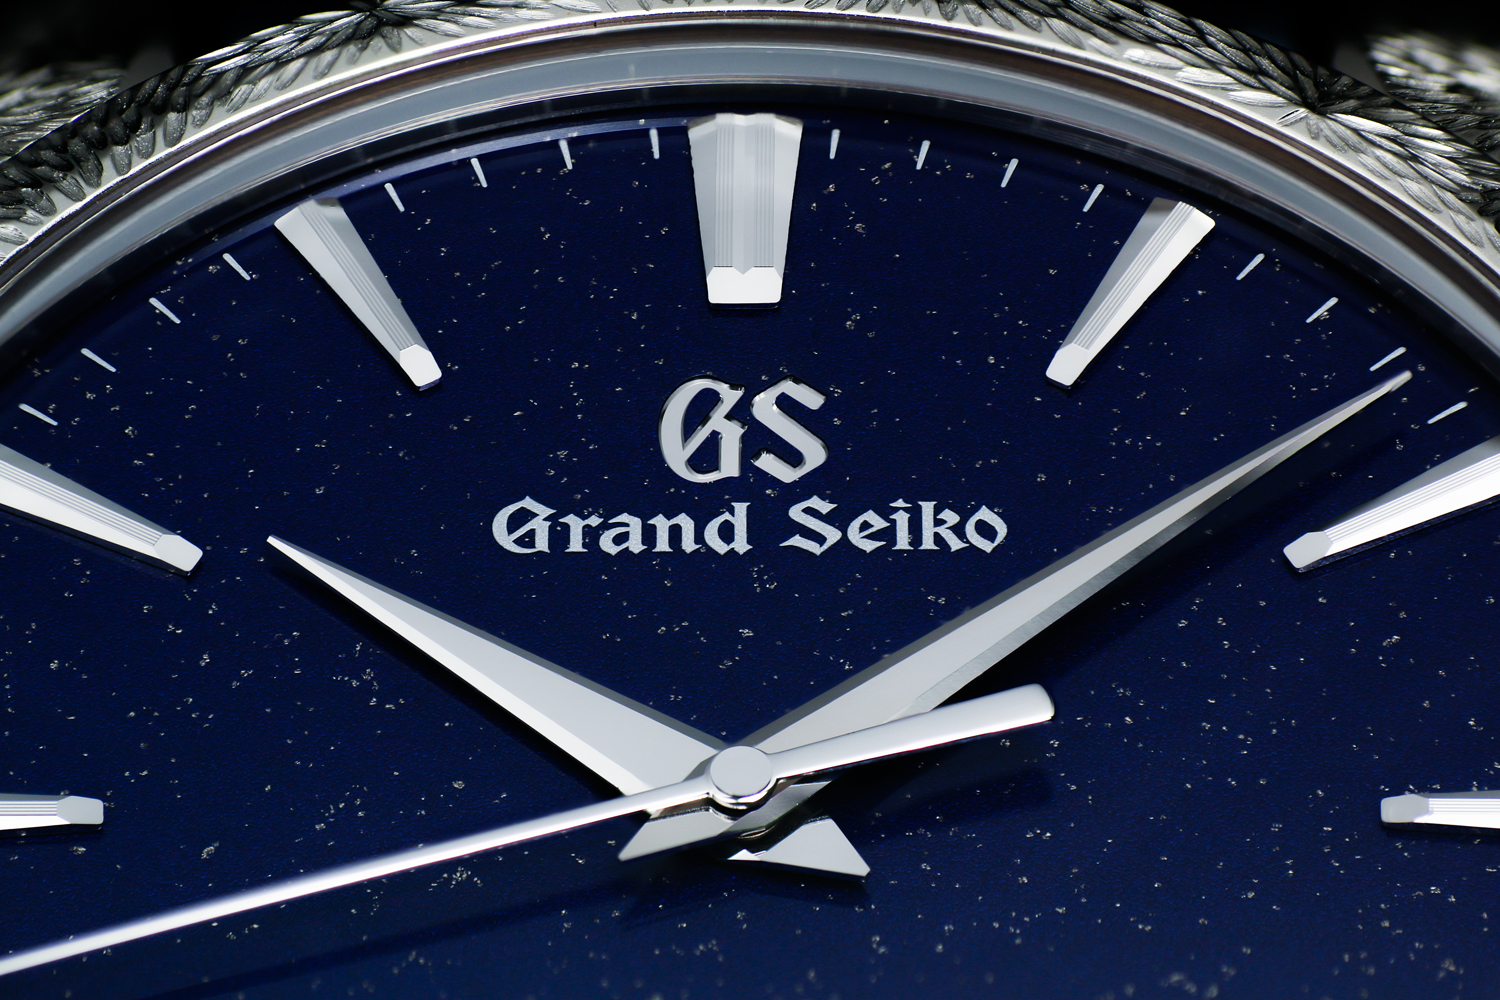 Introducing: The Grand Seiko SBGZ007 evokes the starry skies of Japan